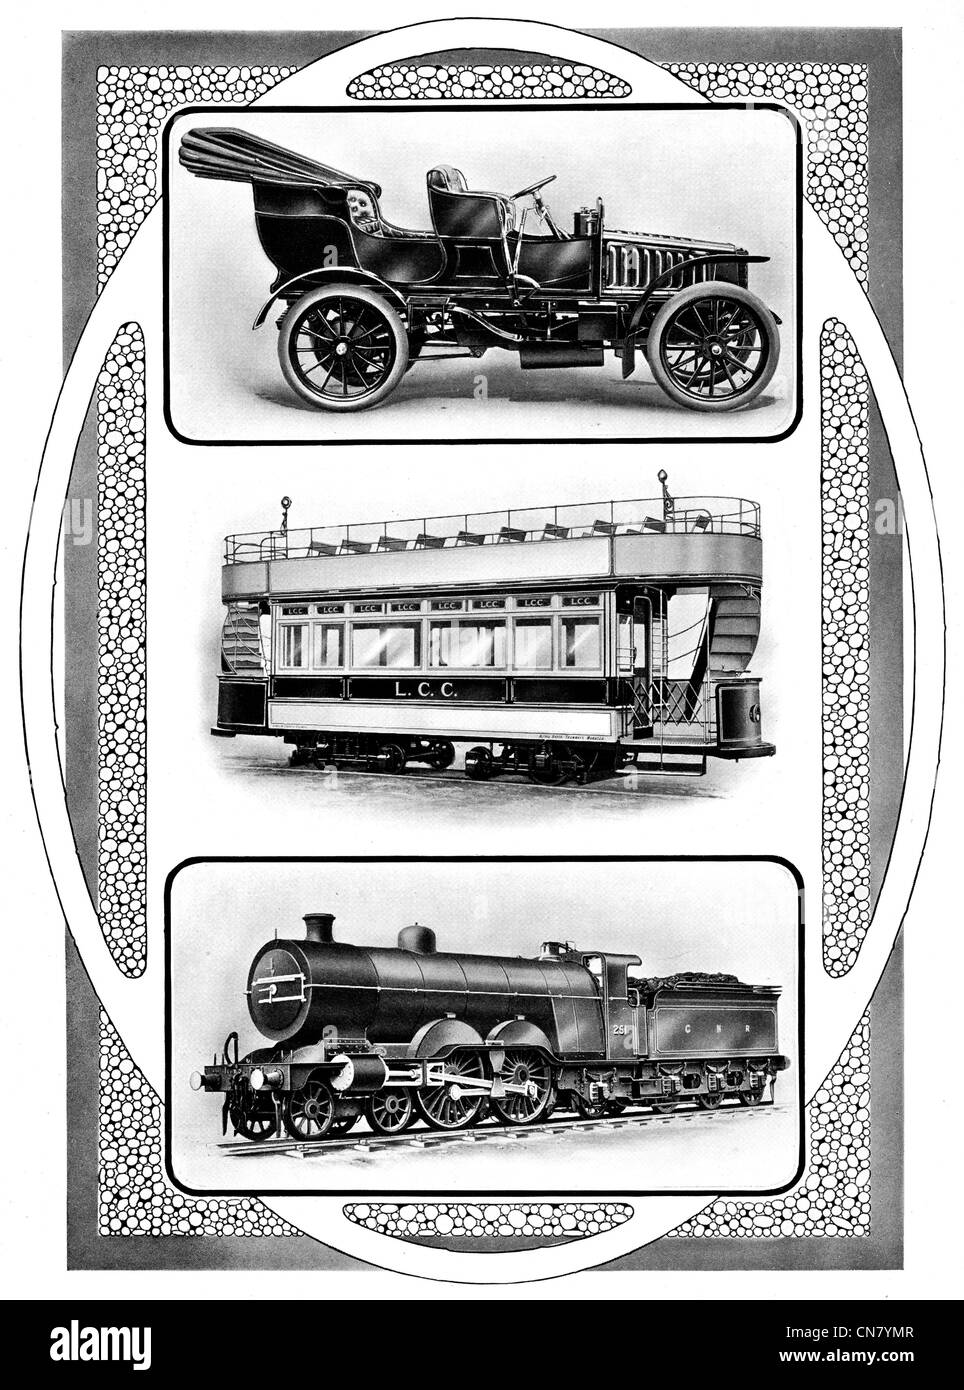 1900 Car Tram Train Vehicle Public Transport Locomotive steam engine railway Stock Photo